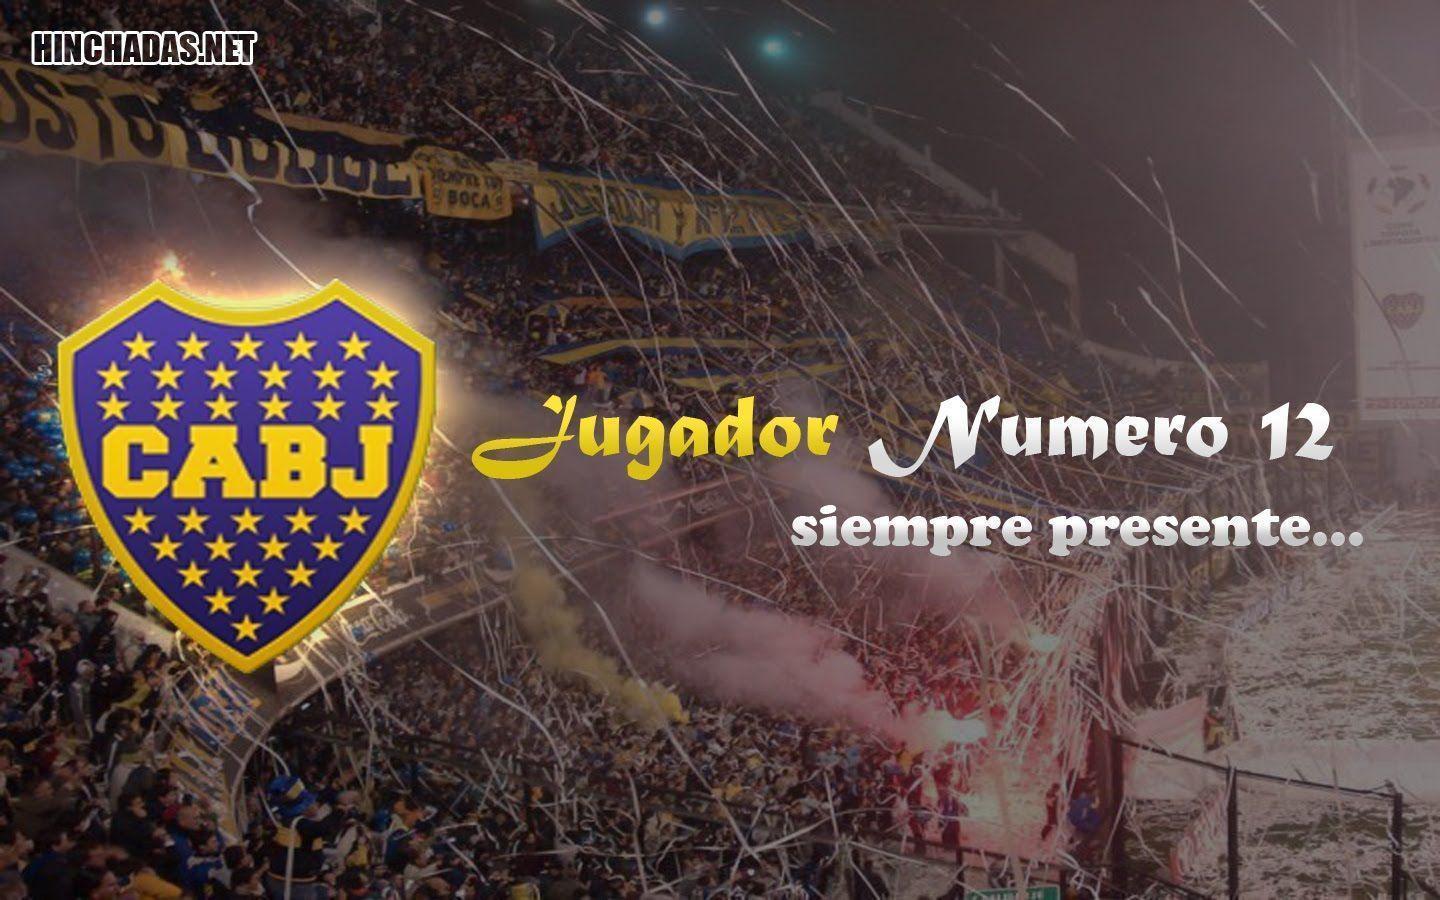 kane blog picz: Wallpaper Boca Juniors HD